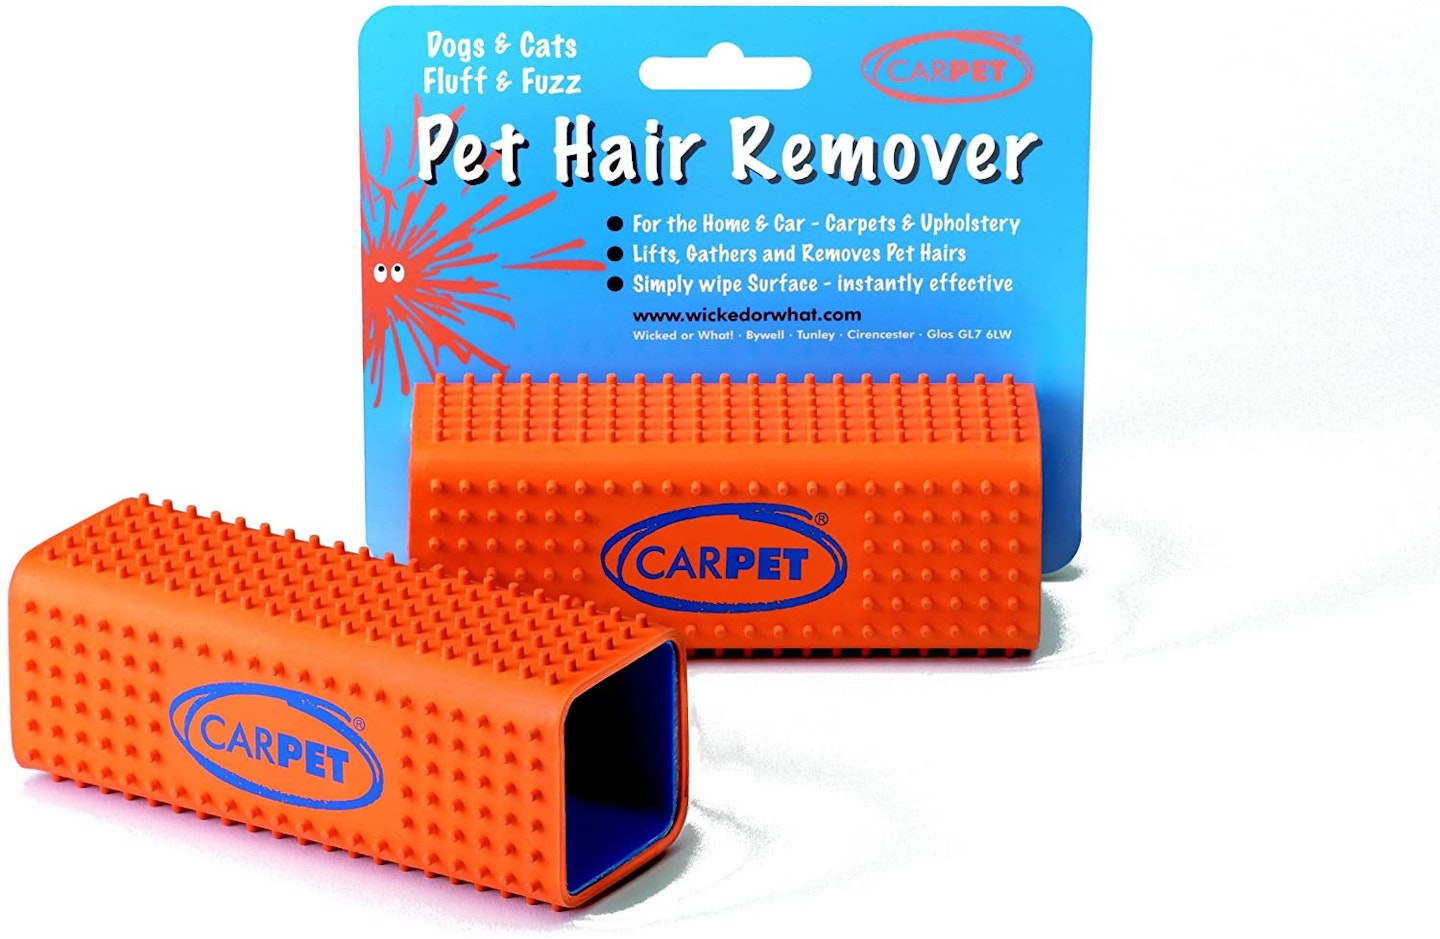 the carpet pet hair remover